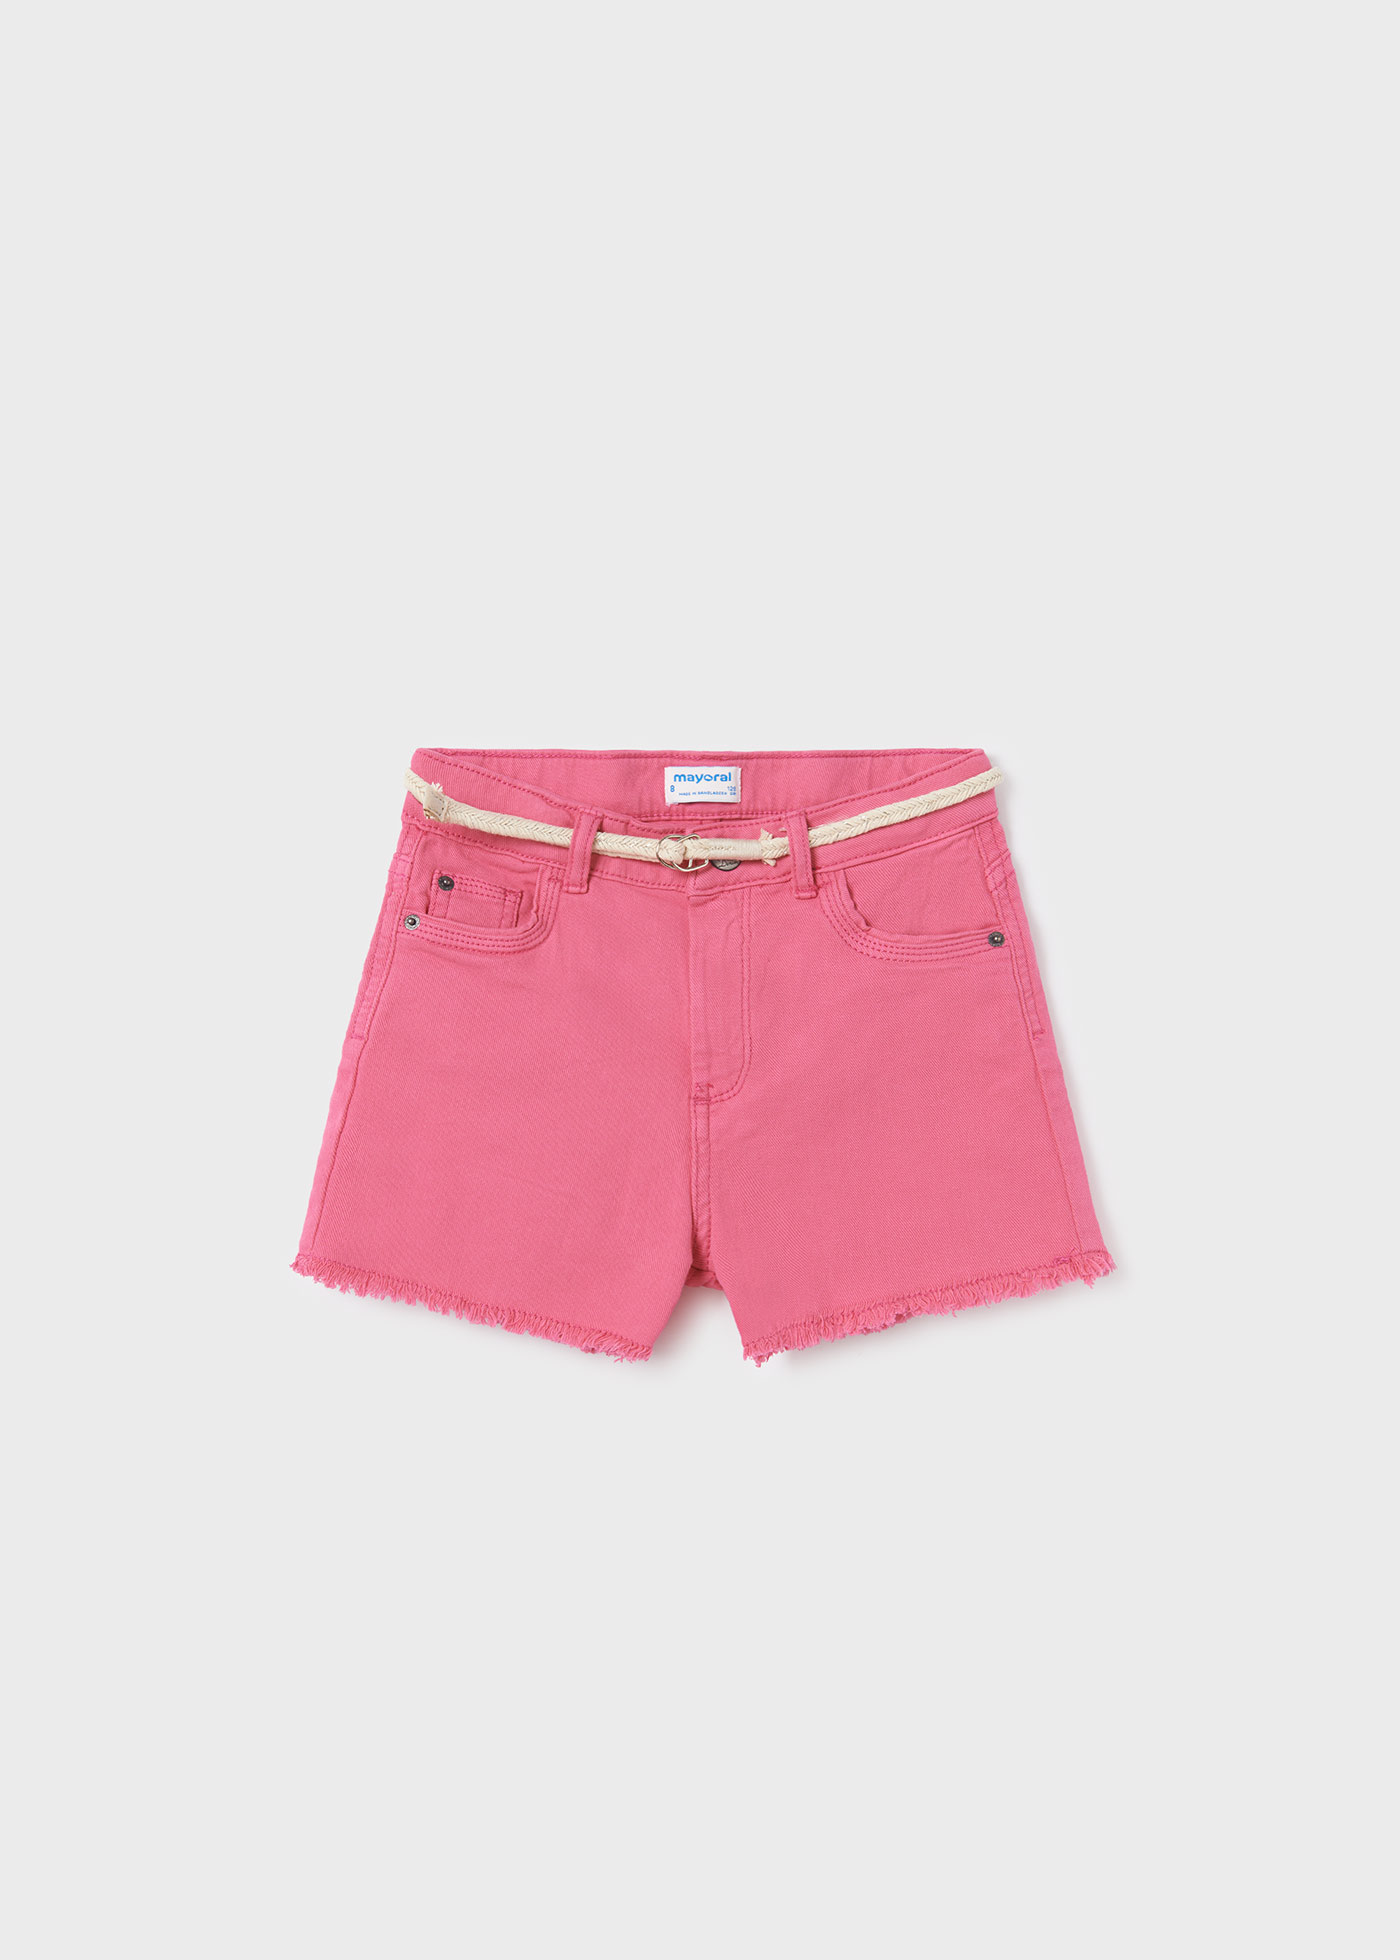 Belted bermuda pink - Women's Shorts